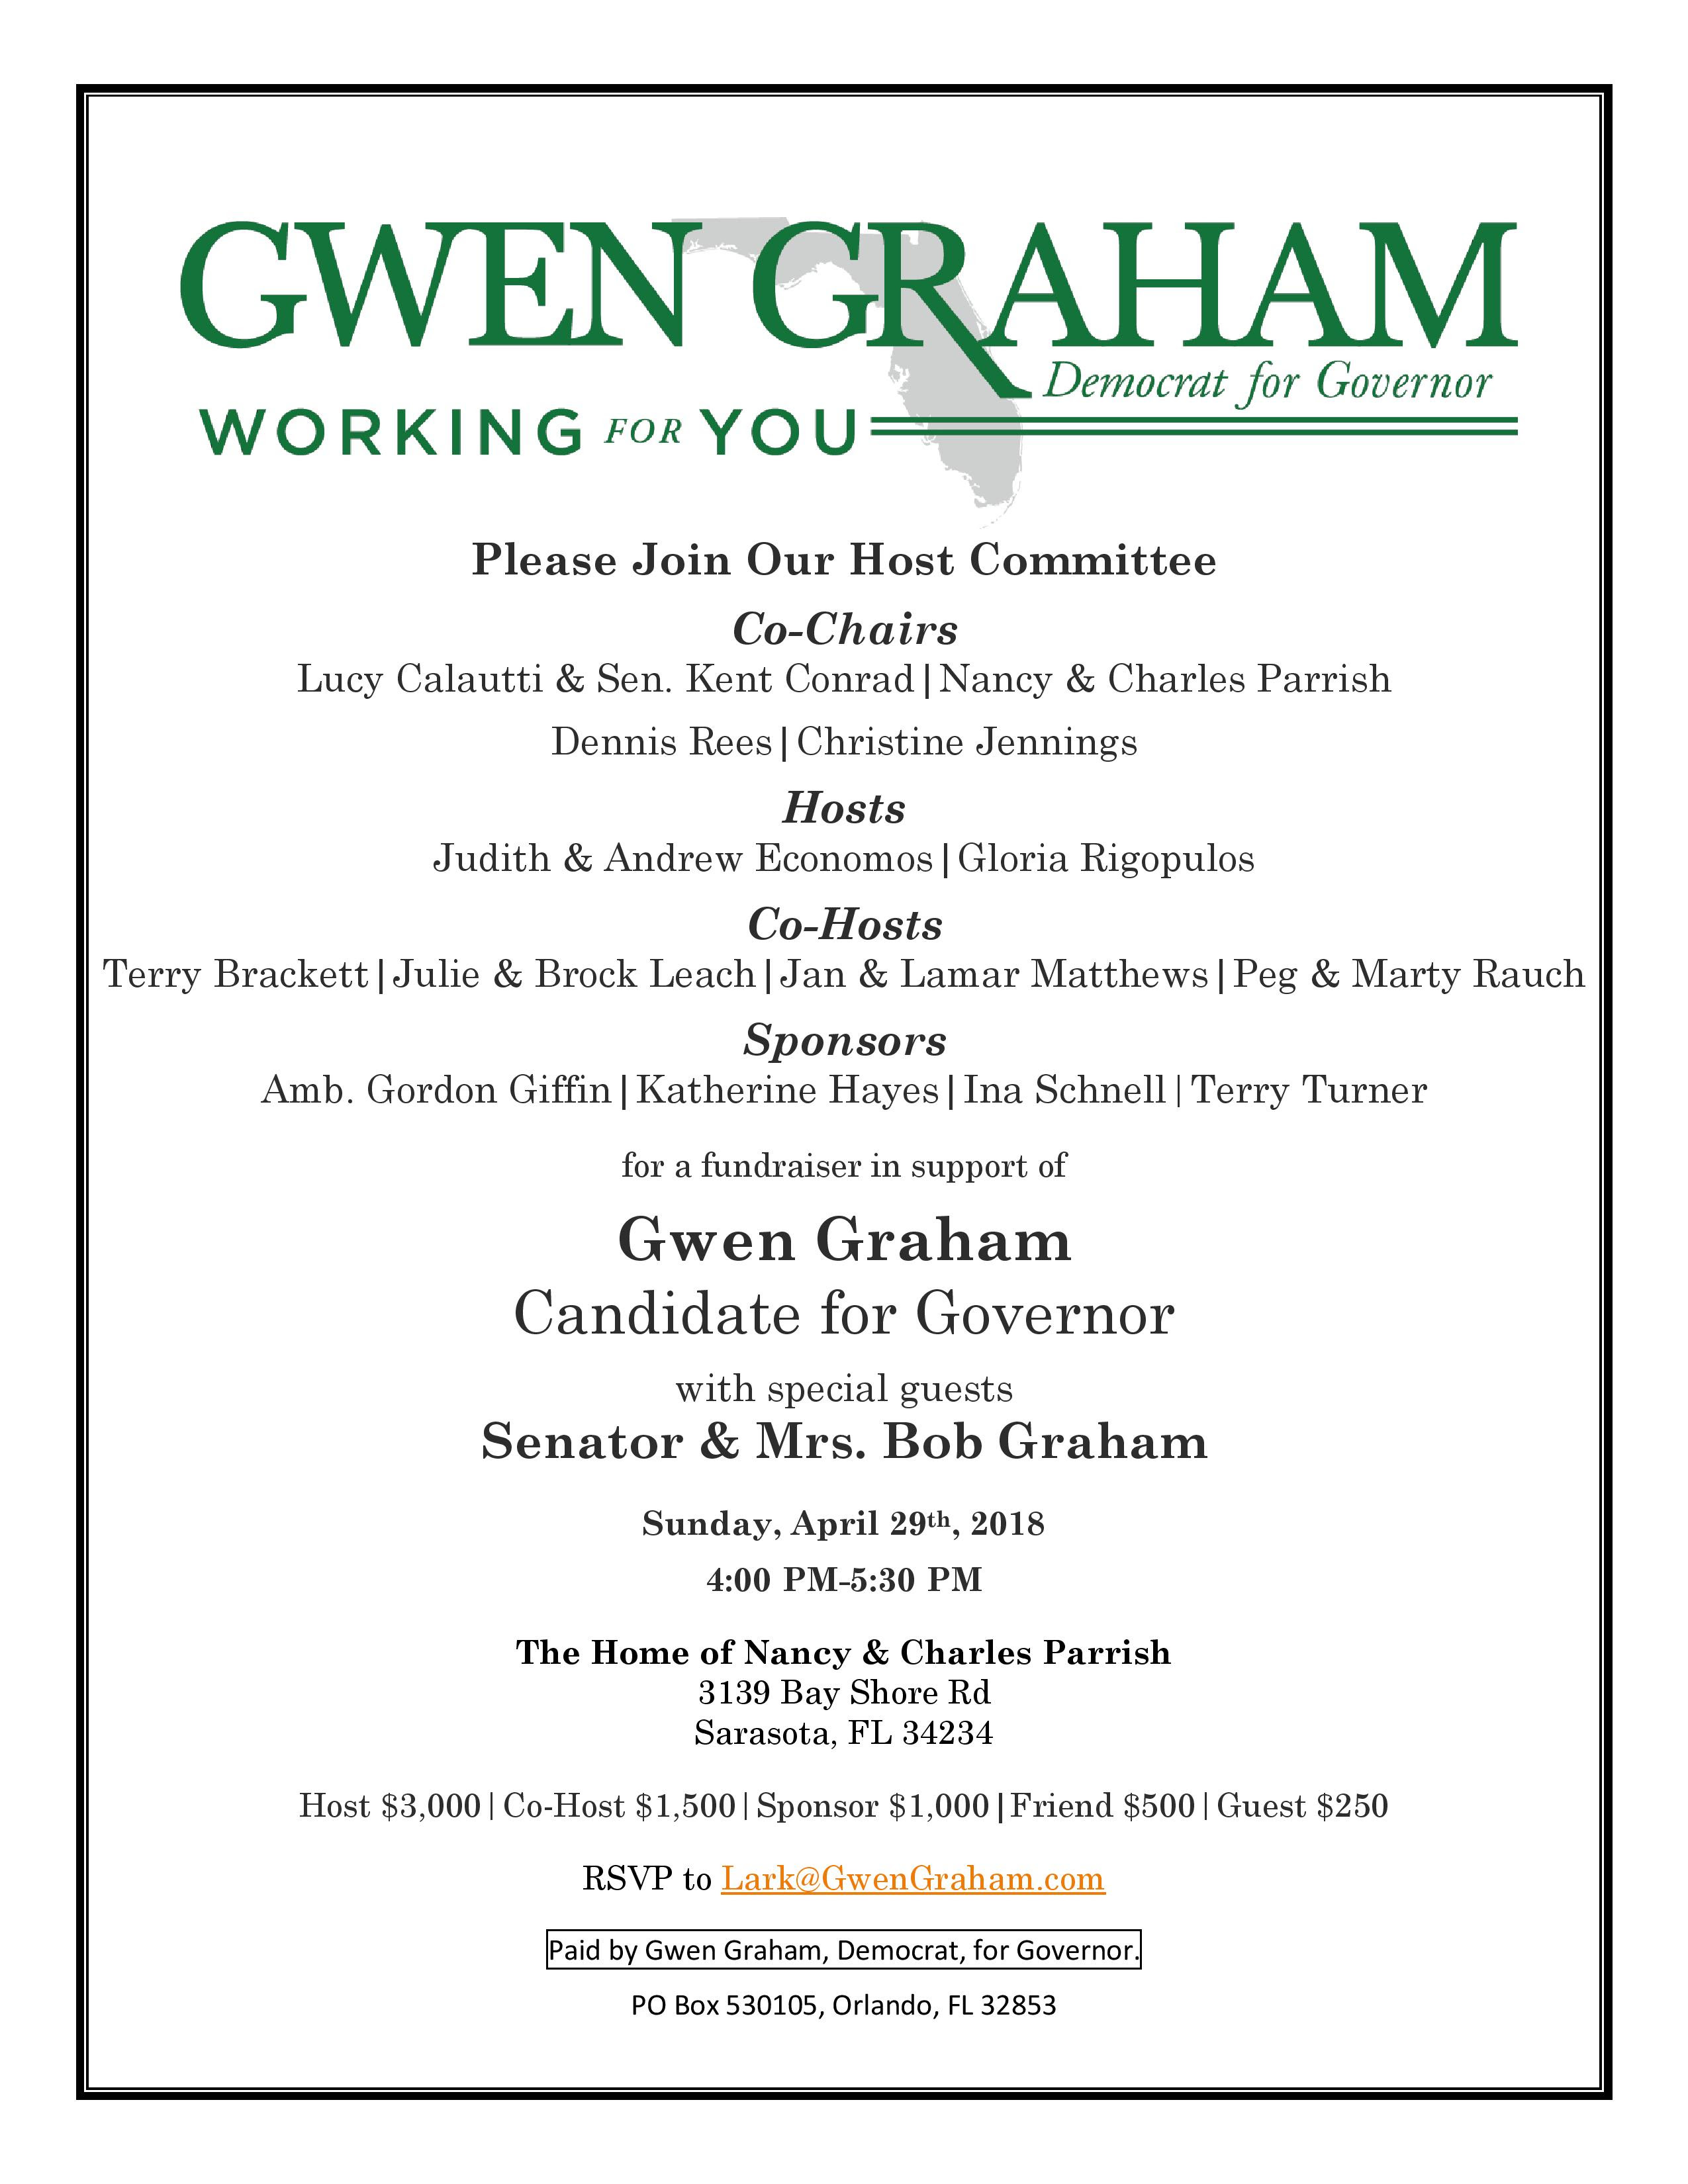 Gwen Graham fundraiser 4.29.2018